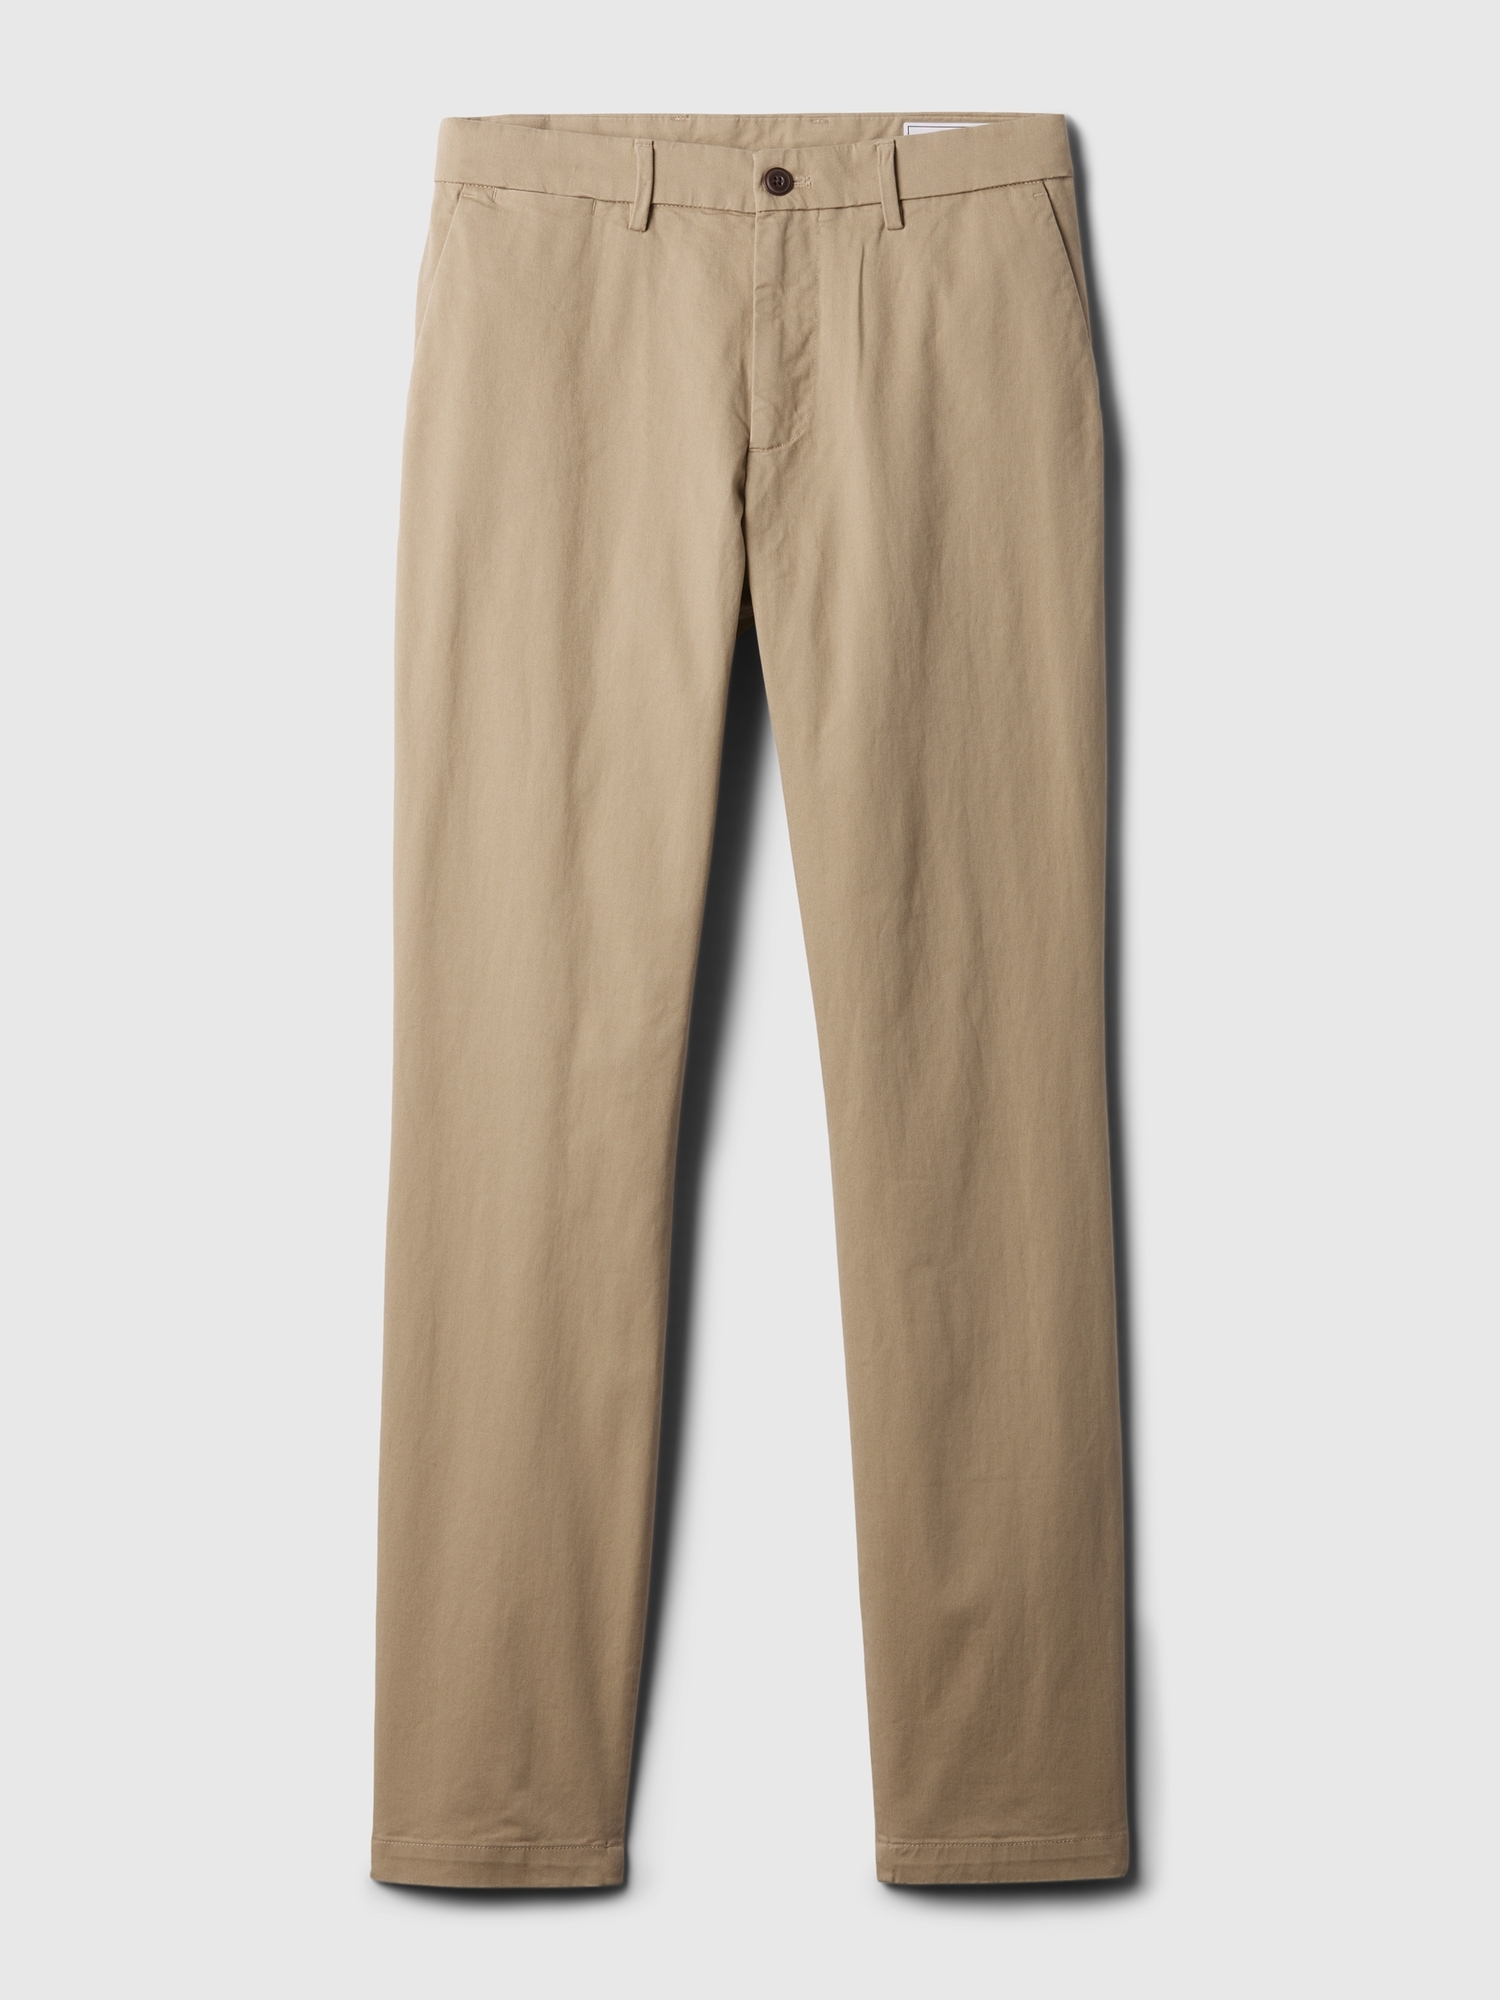 Modern Khakis Skinny Fit with GapFlex